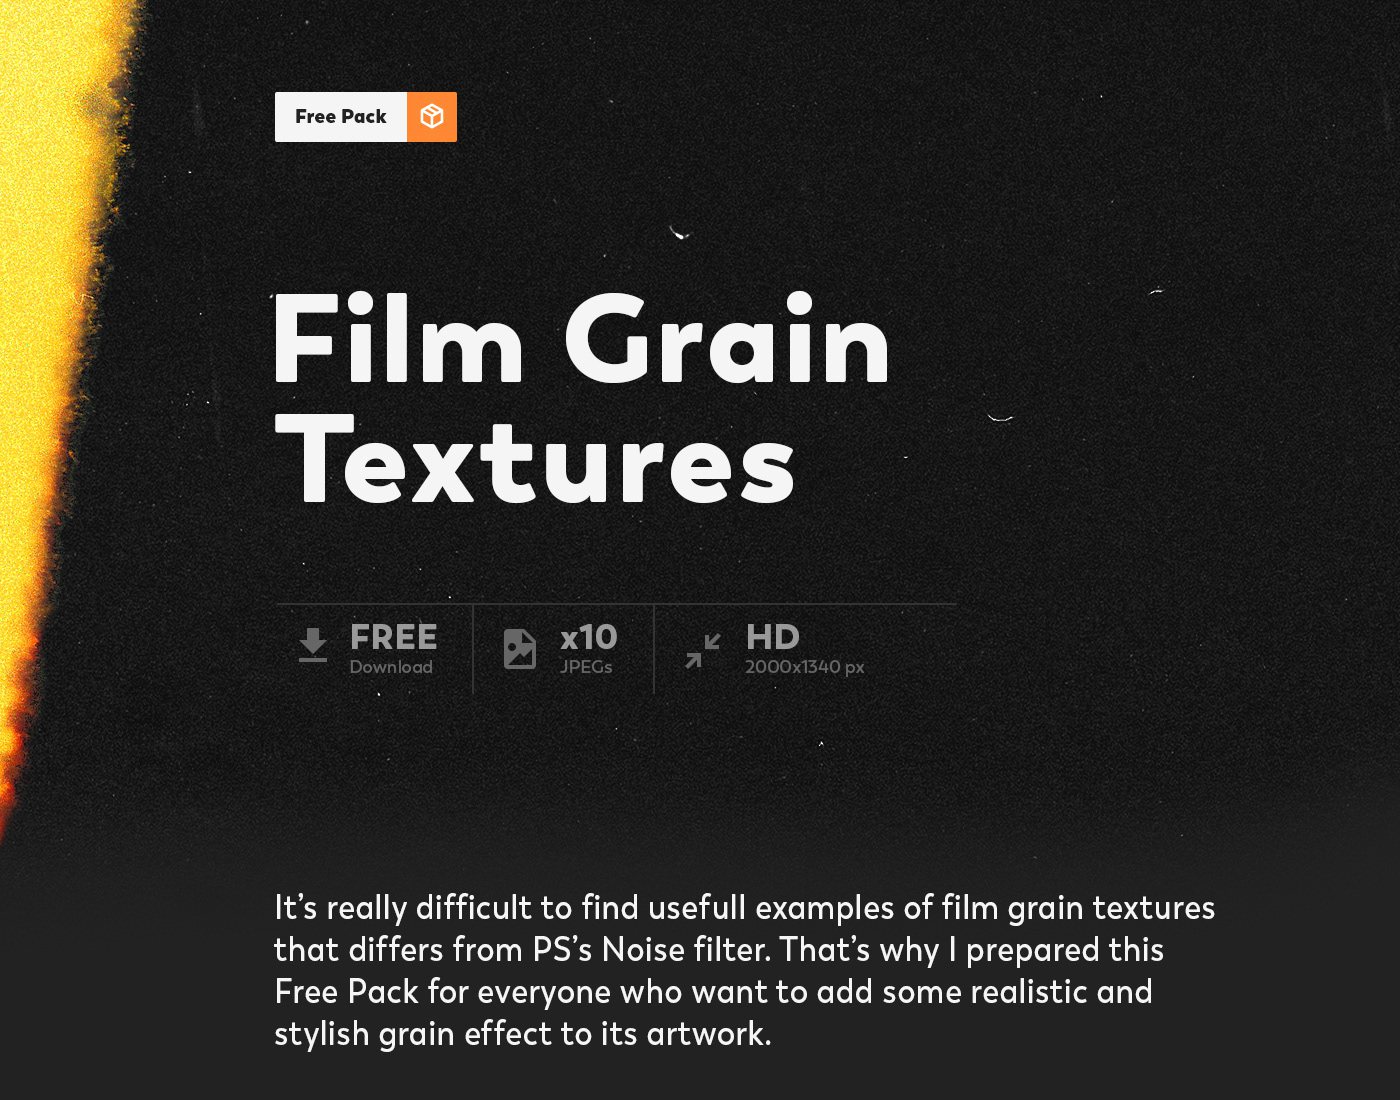 Film Grain Textures FREE PACK